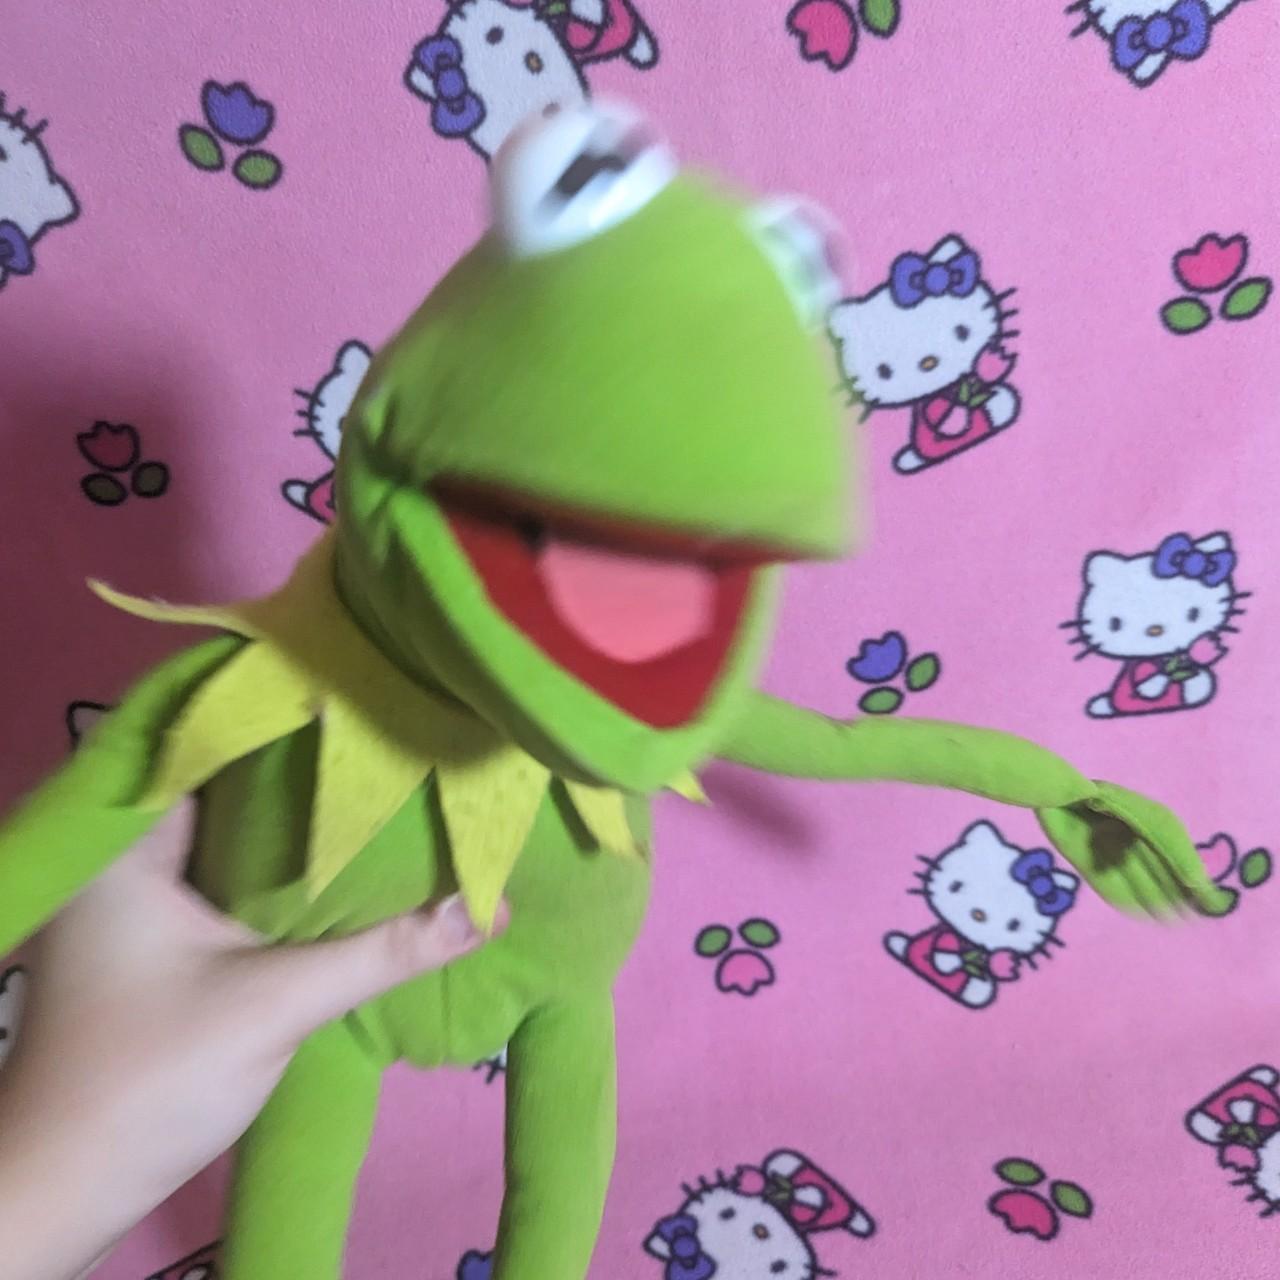 18 Kermit The Frog Poseable Plush Toy 🐸 amazing